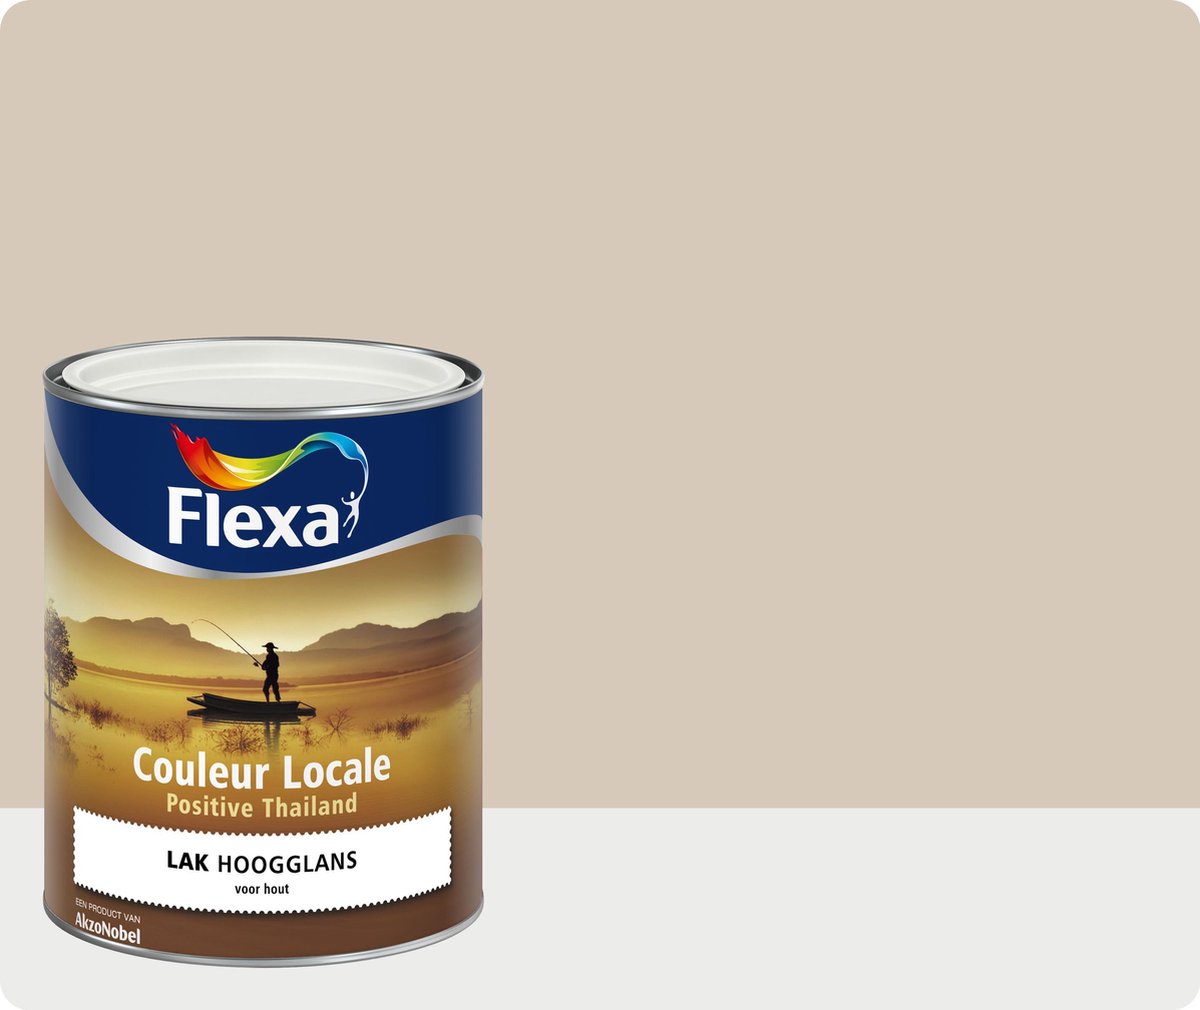 Flexa Couleur Locale - Lak Hoogglans - Positive Thailand - Bamboo - 6075 - 750 ml